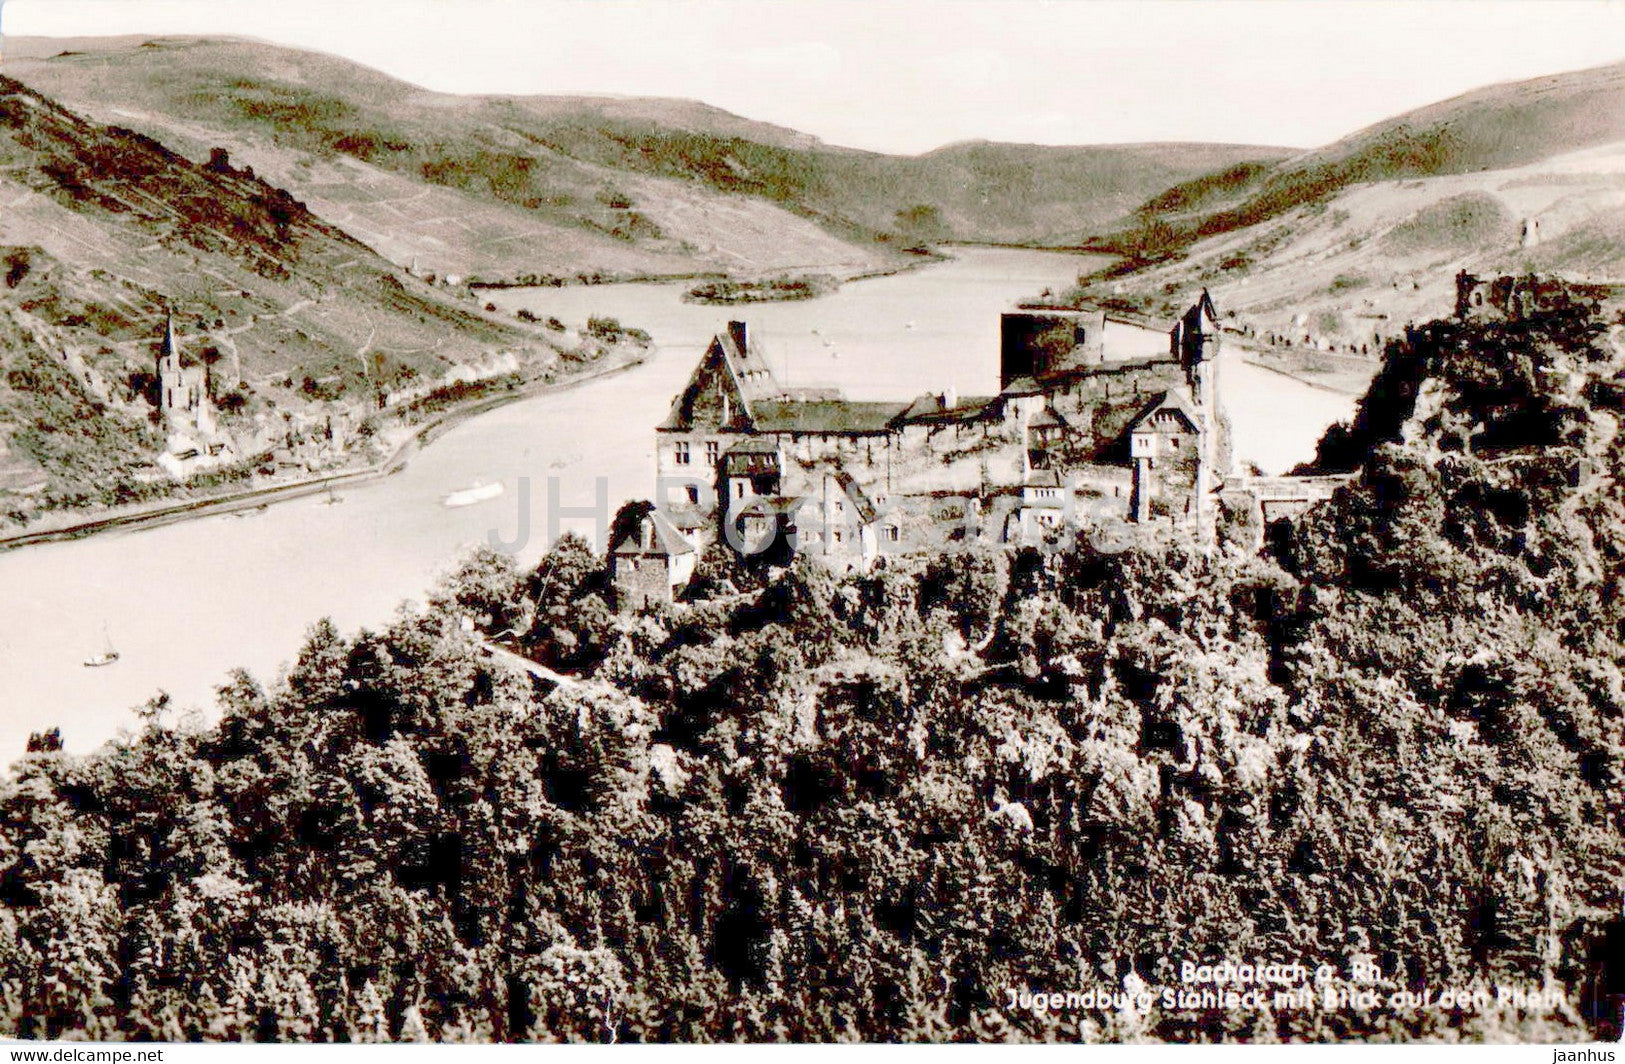 Bacharach a Rh - Jugendburg Stahleck mit Blick auf den Rhein - old postcard - 1958 - Germany - used - JH Postcards